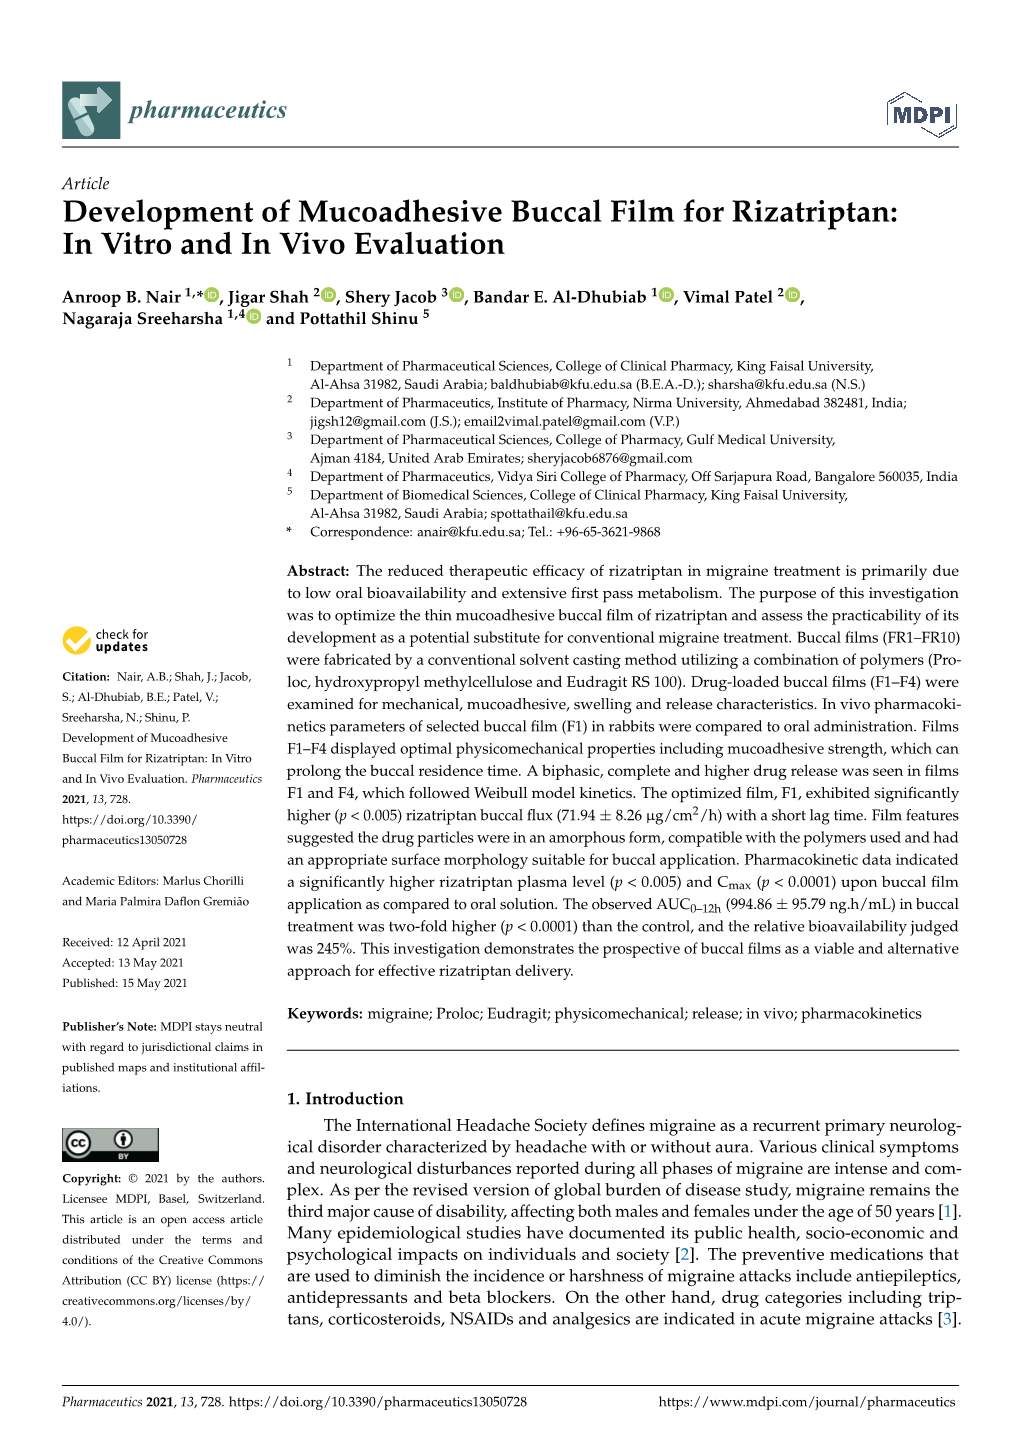 Development of Mucoadhesive Buccal Film for Rizatriptan: in Vitro and in Vivo Evaluation